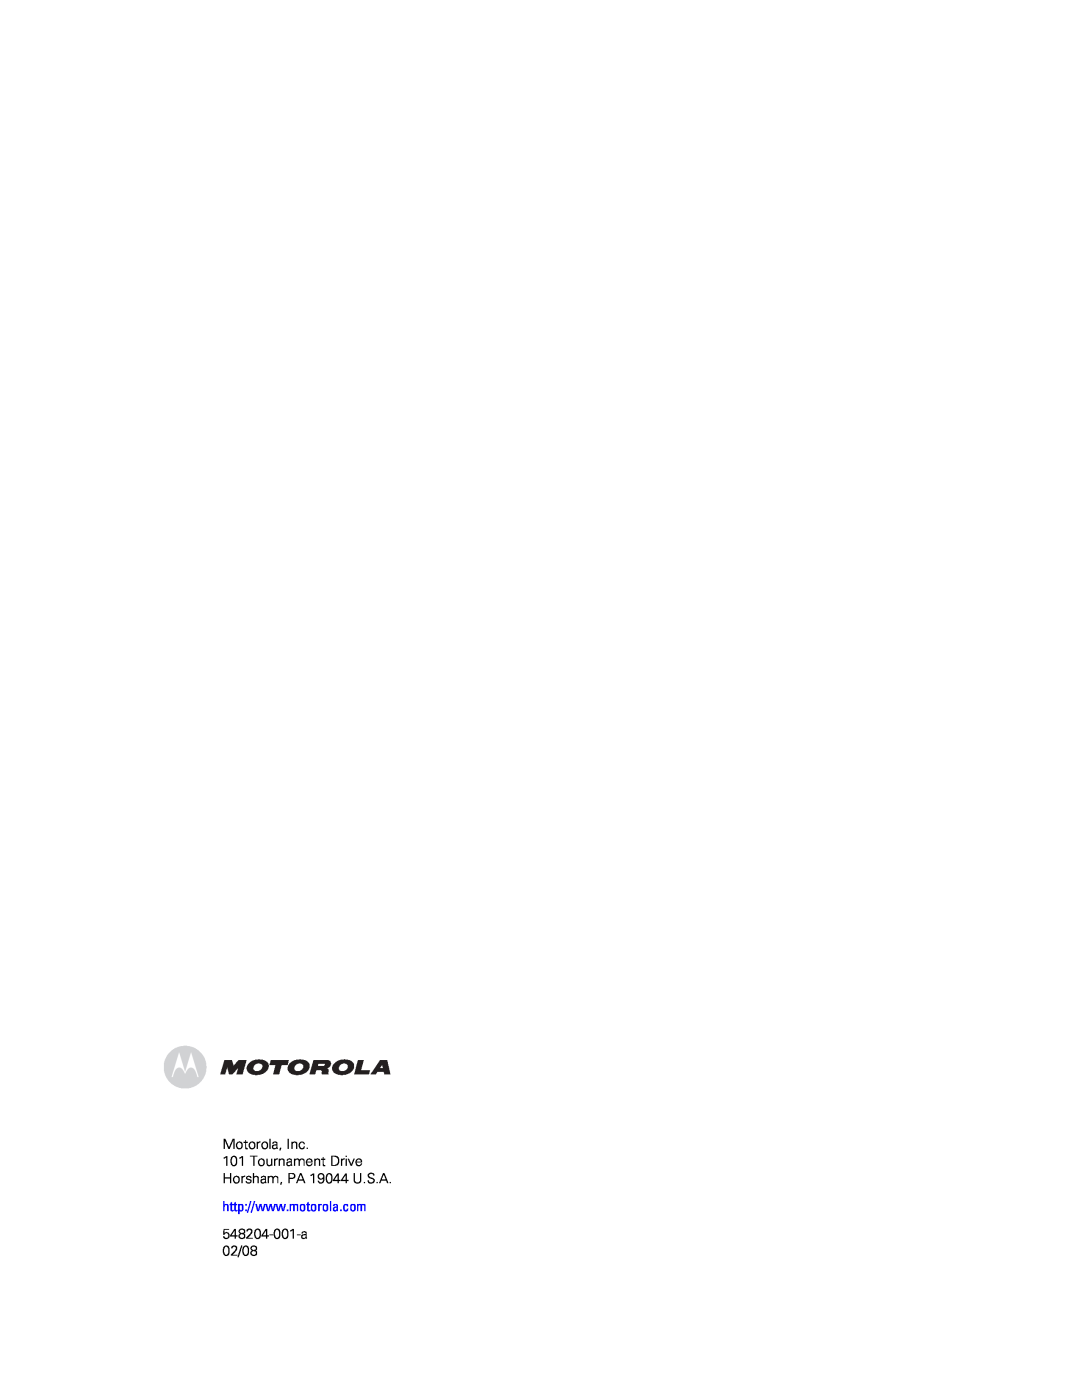 Motorola QIP7100 operation manual Motorola, Inc 101 Tournament Drive Horsham, PA 19044 U.S.A, 548204-001-a 02/08 